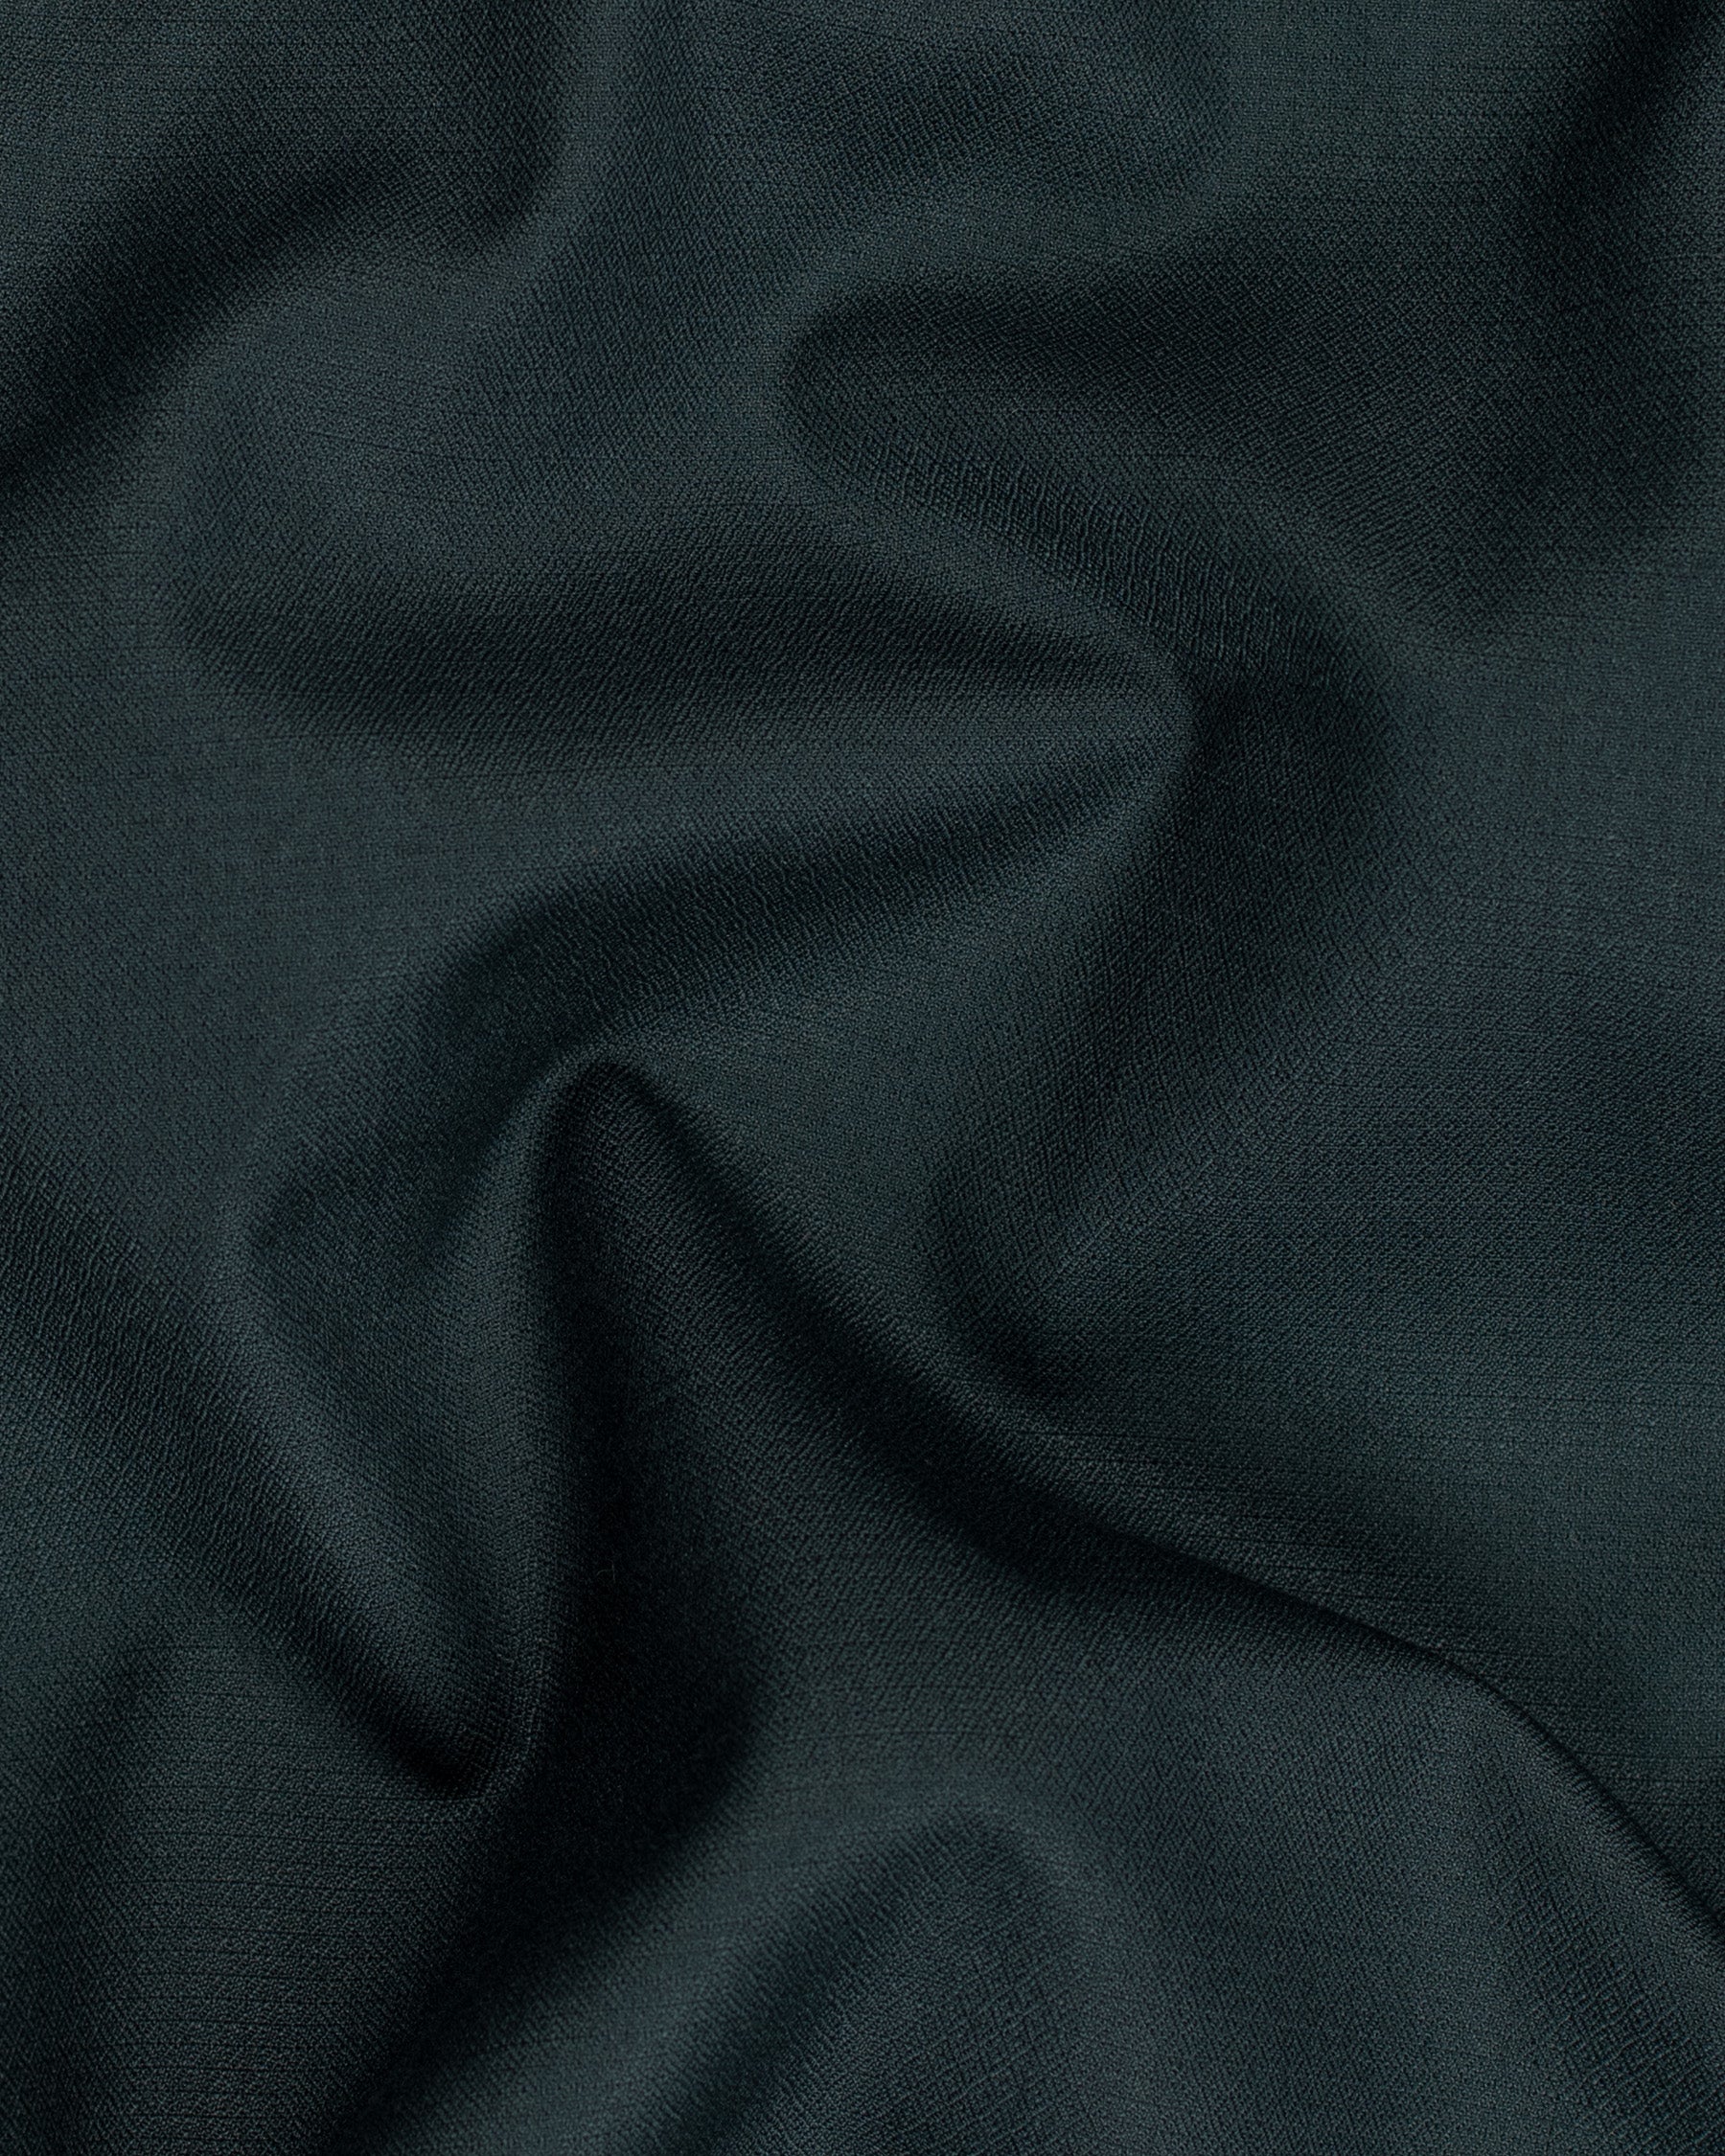 Charade Wool Subtle Textured Rich  Premium Waistcoat